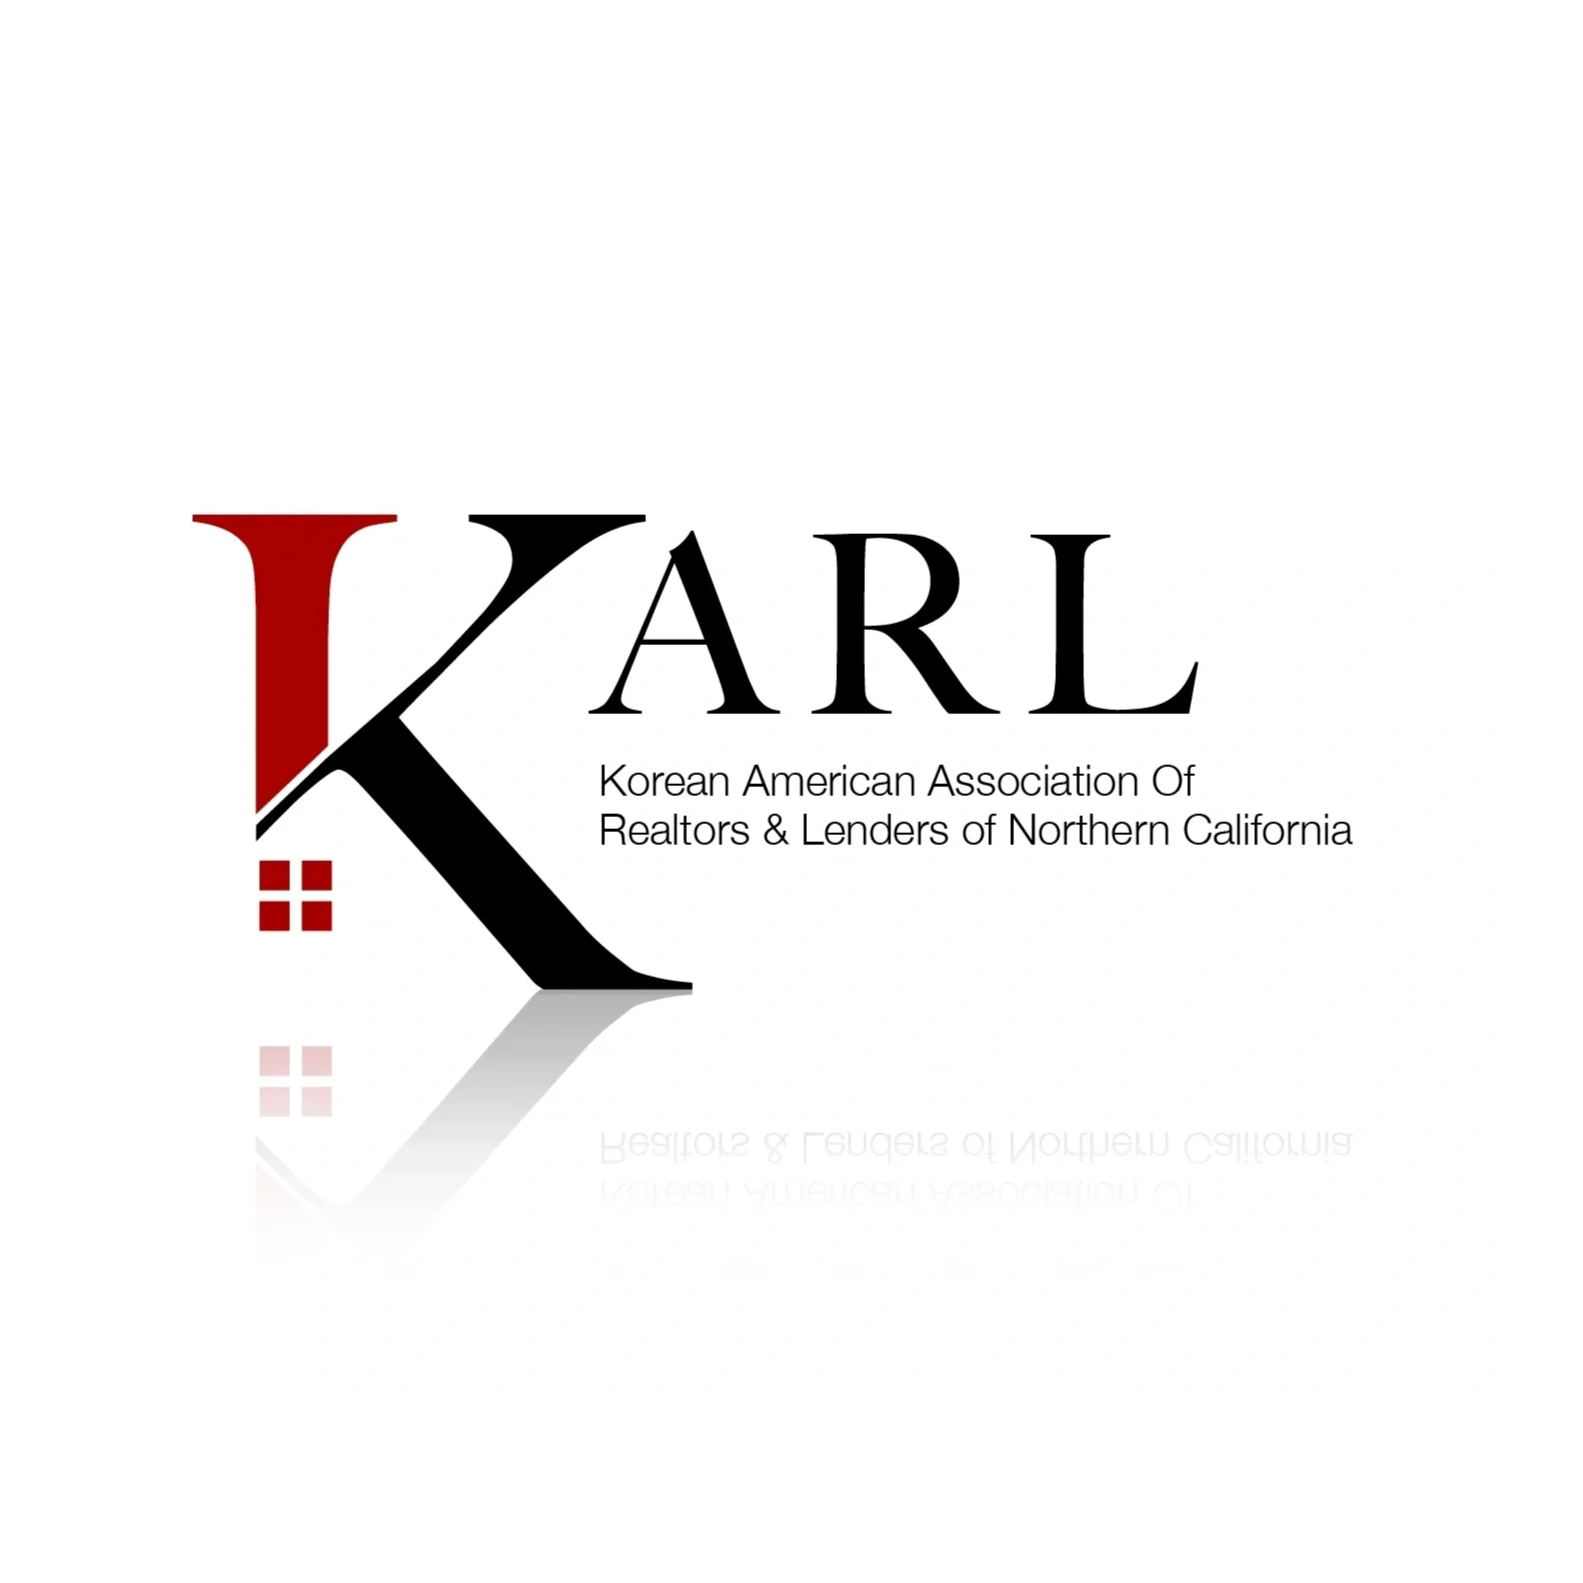 Korean Education Charity Organization in USA - Korean American Association of Realtors and Lenders of Northern California